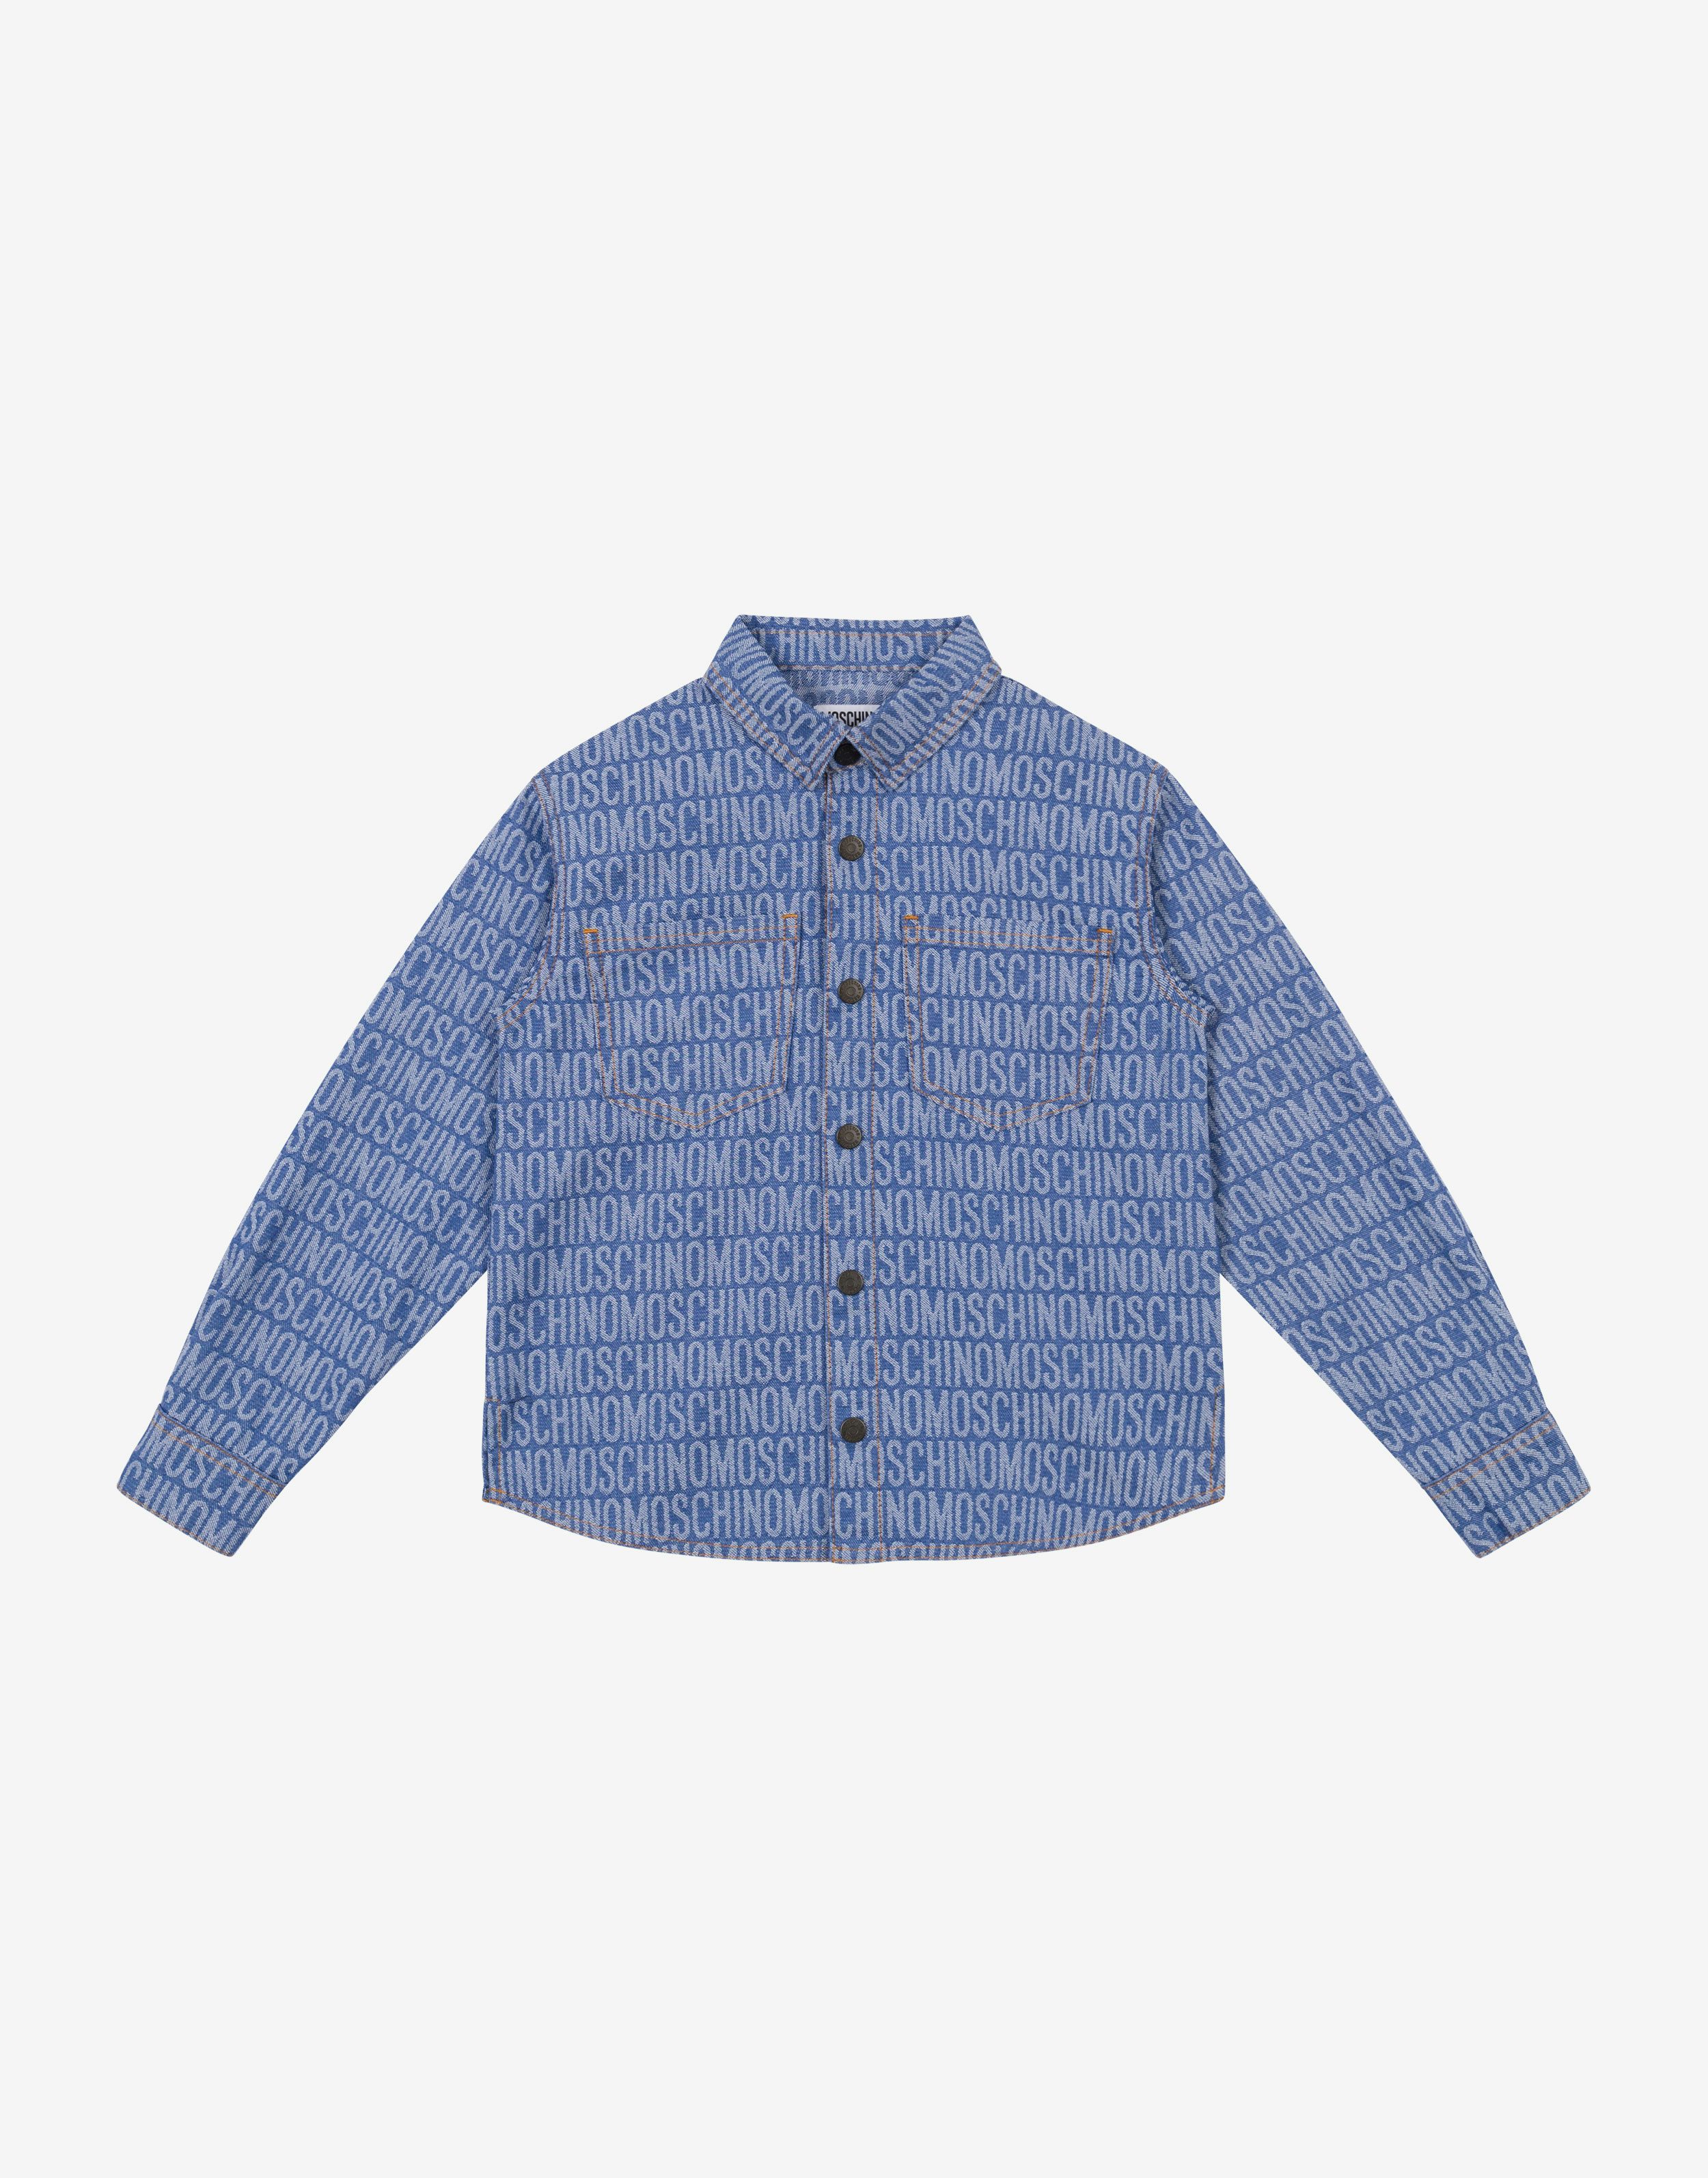 Moschino jeanshemd allover logo